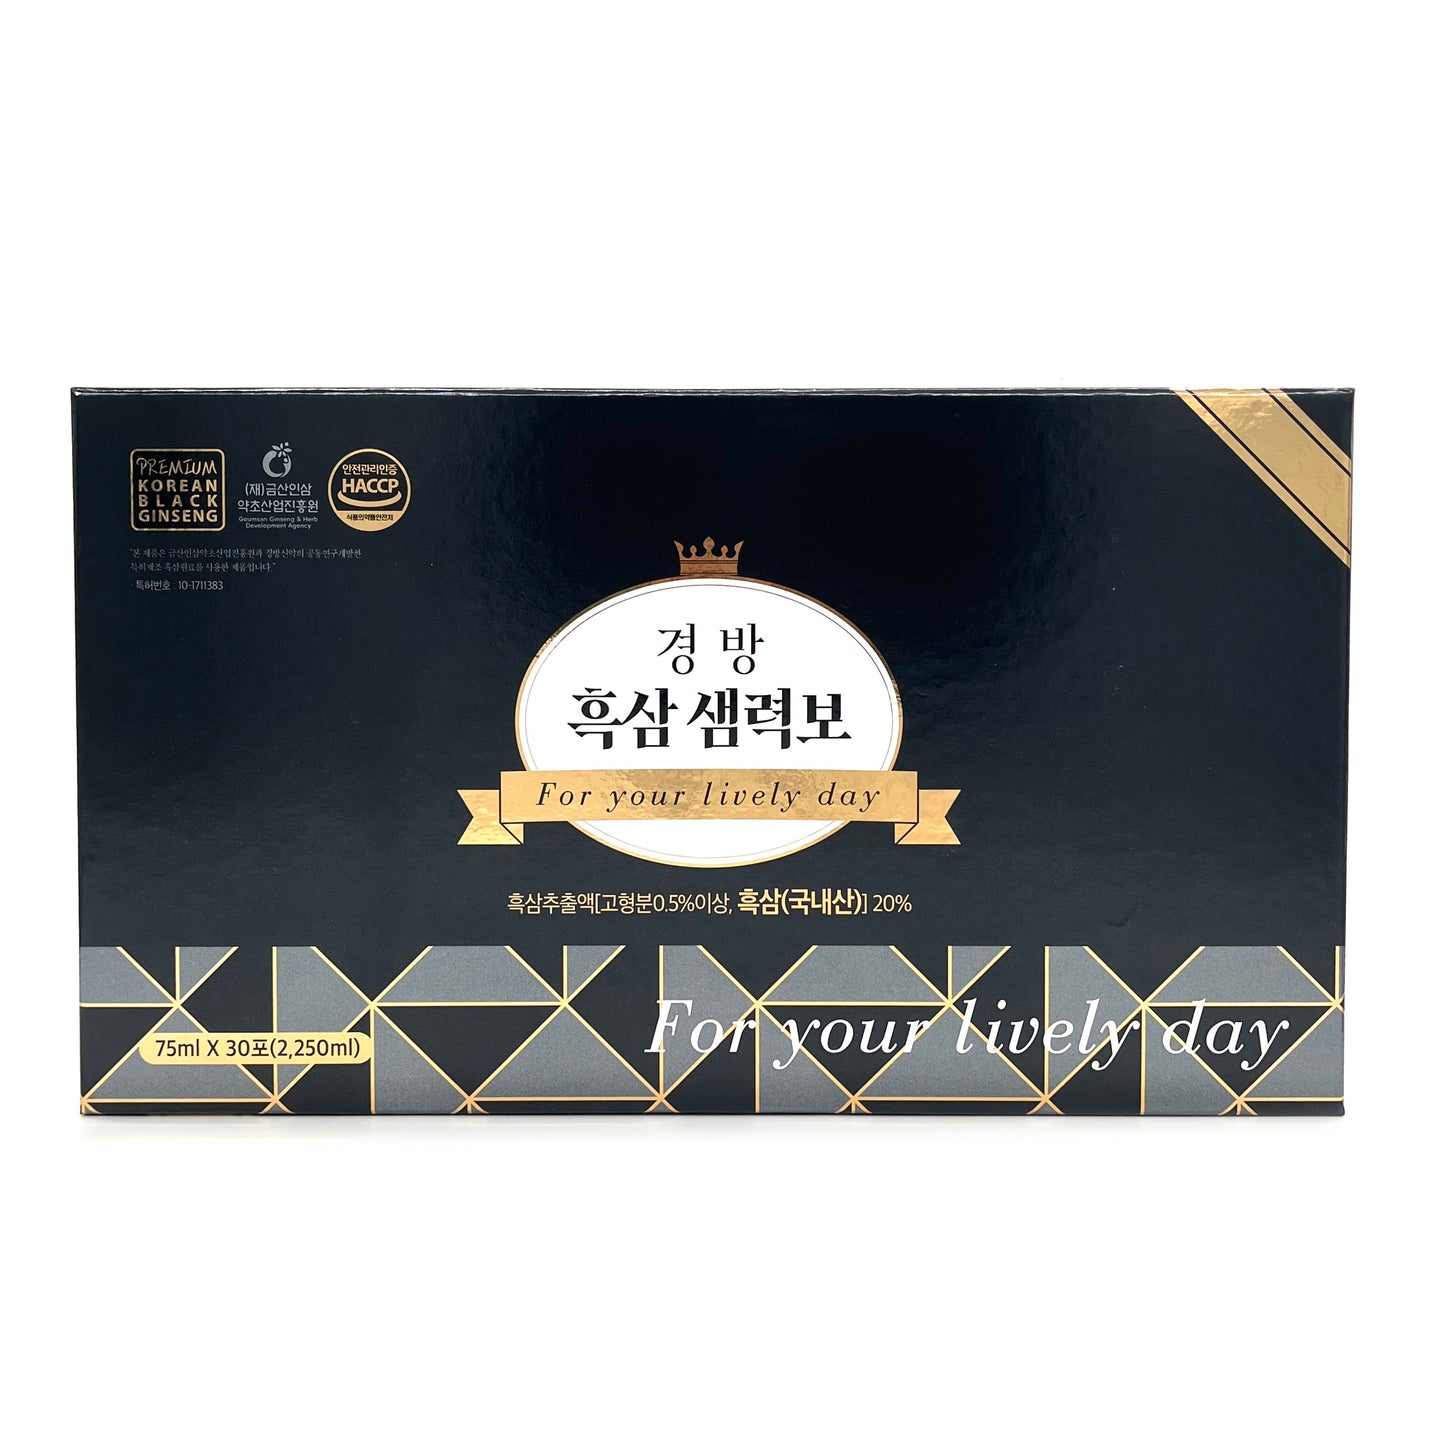 [Kyungbang] Black Ginseng Samlukbo Extract Pouch (75ml x30 2,250ml)